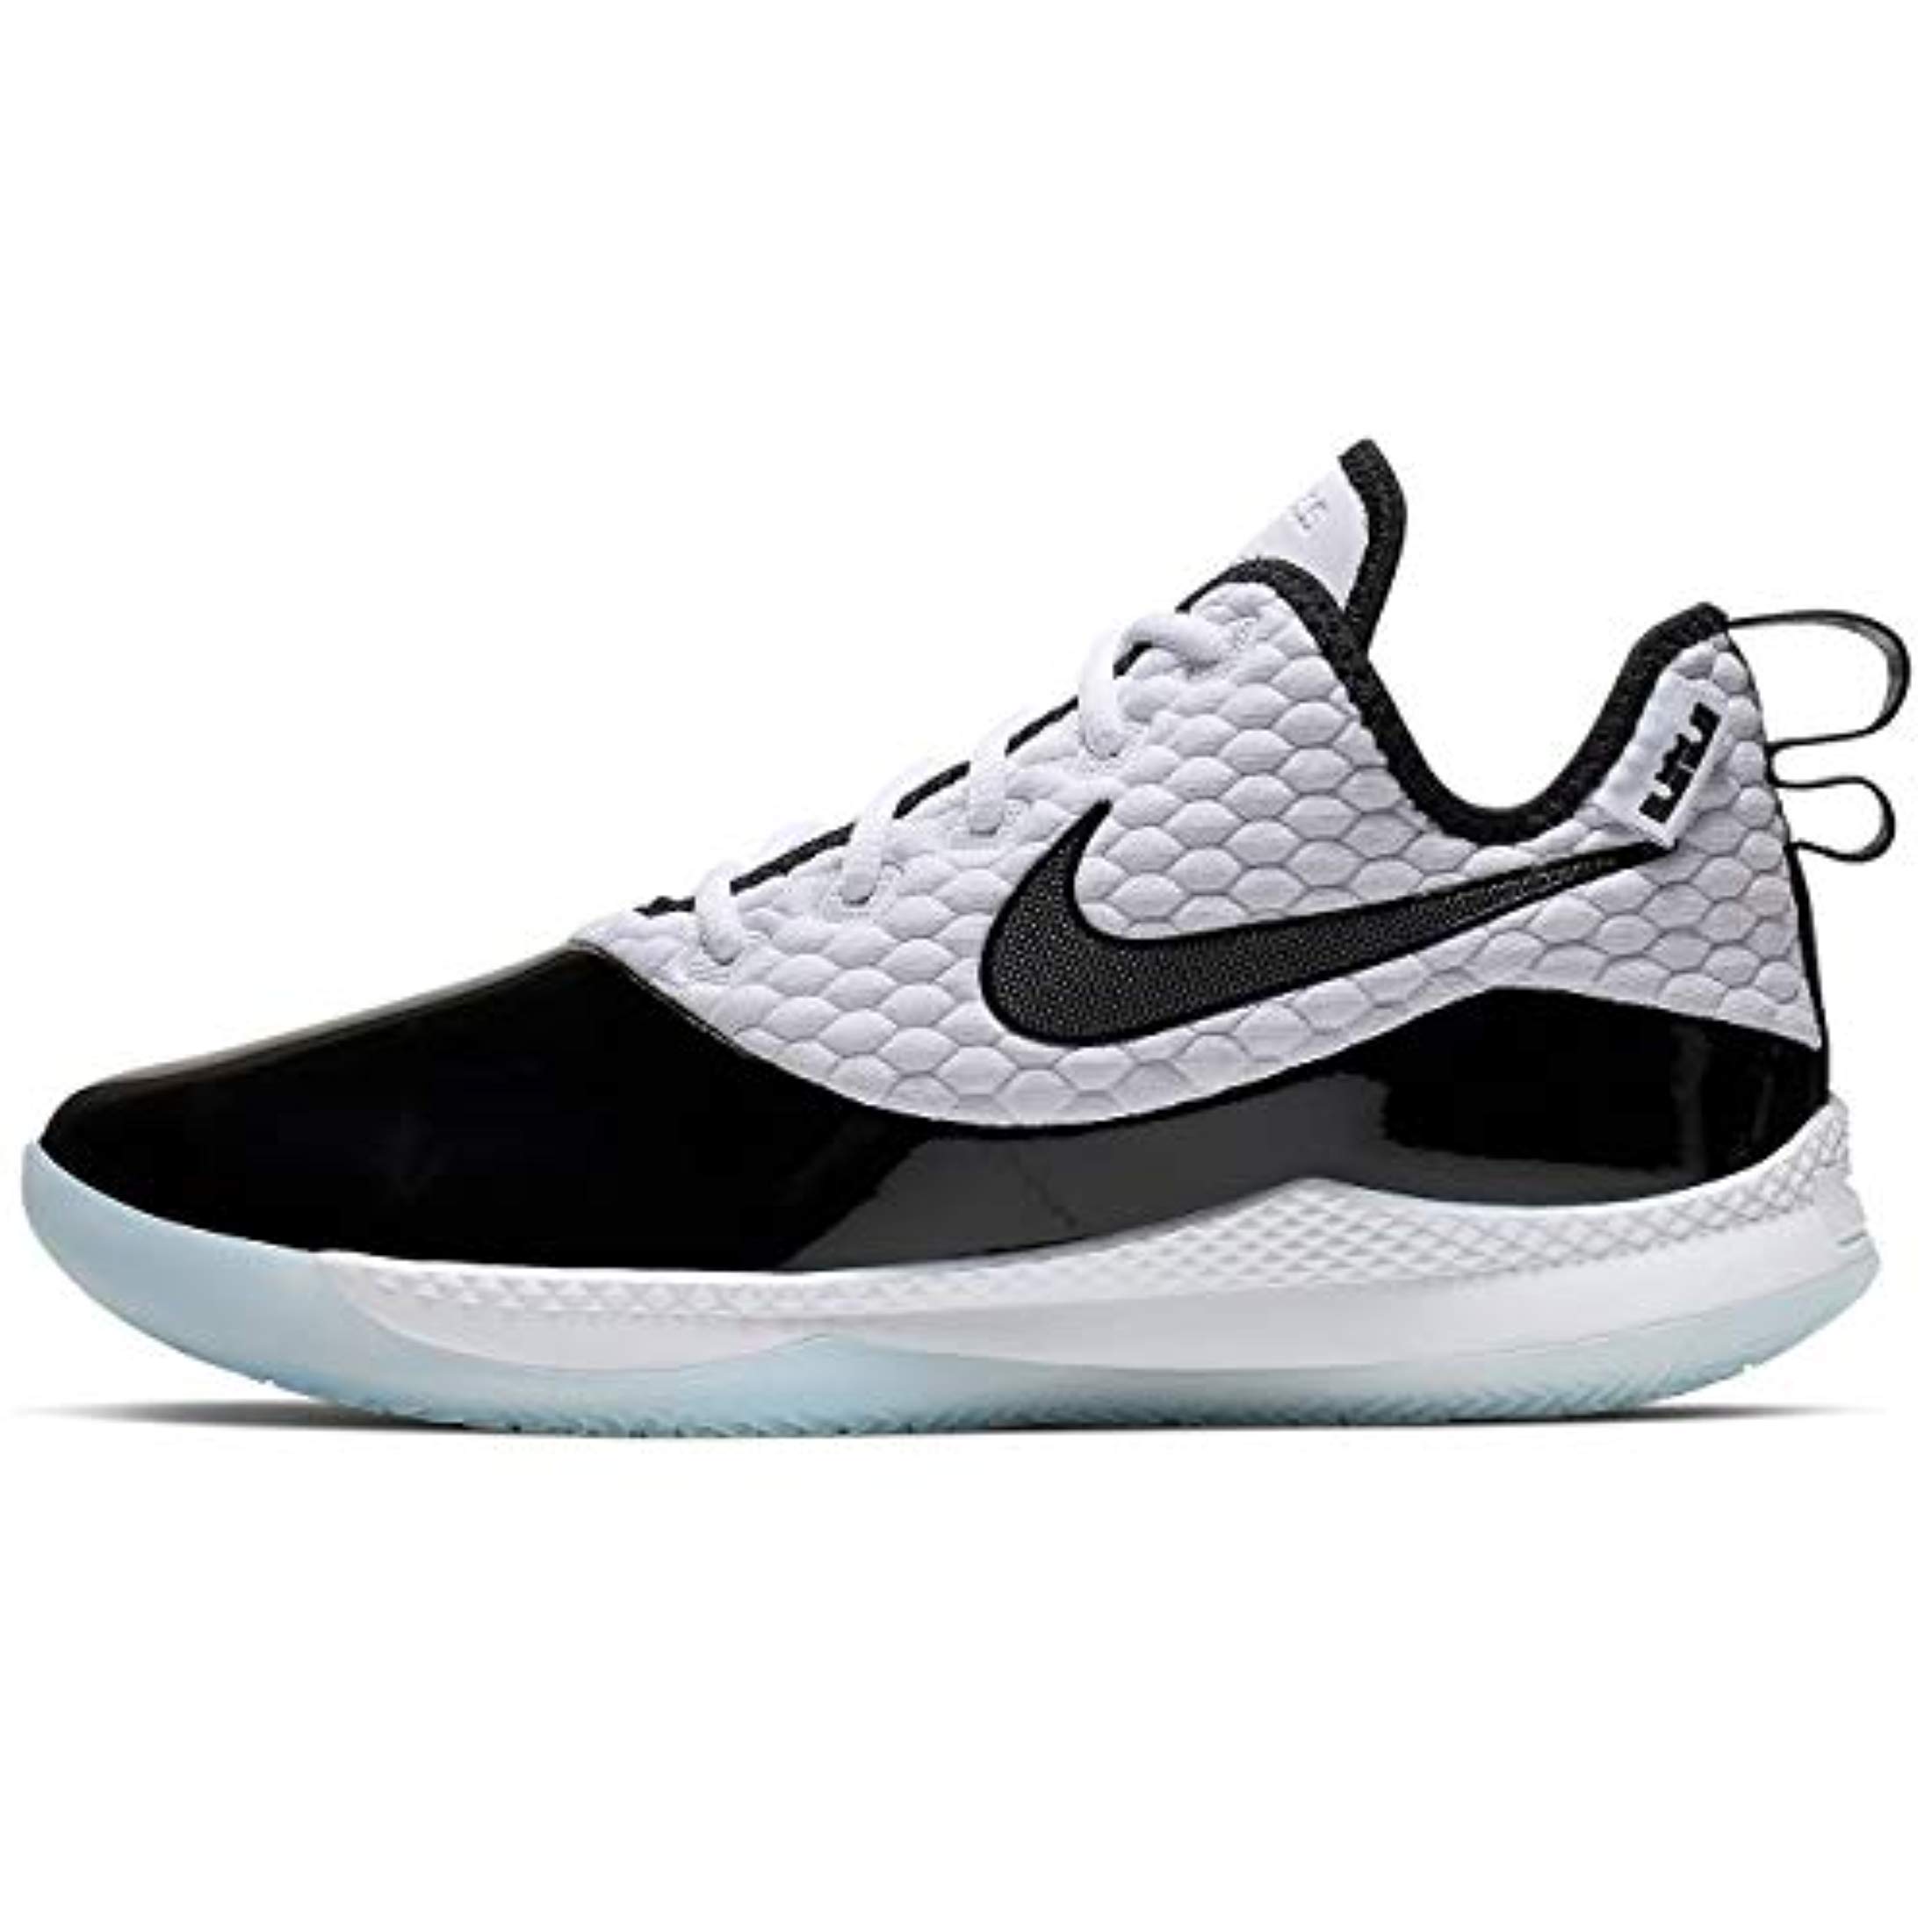 Nike Men's Lebron Witness III PRM Basketball Shoe (8.5 M US, White/Black/Half Blue) - image 1 of 6